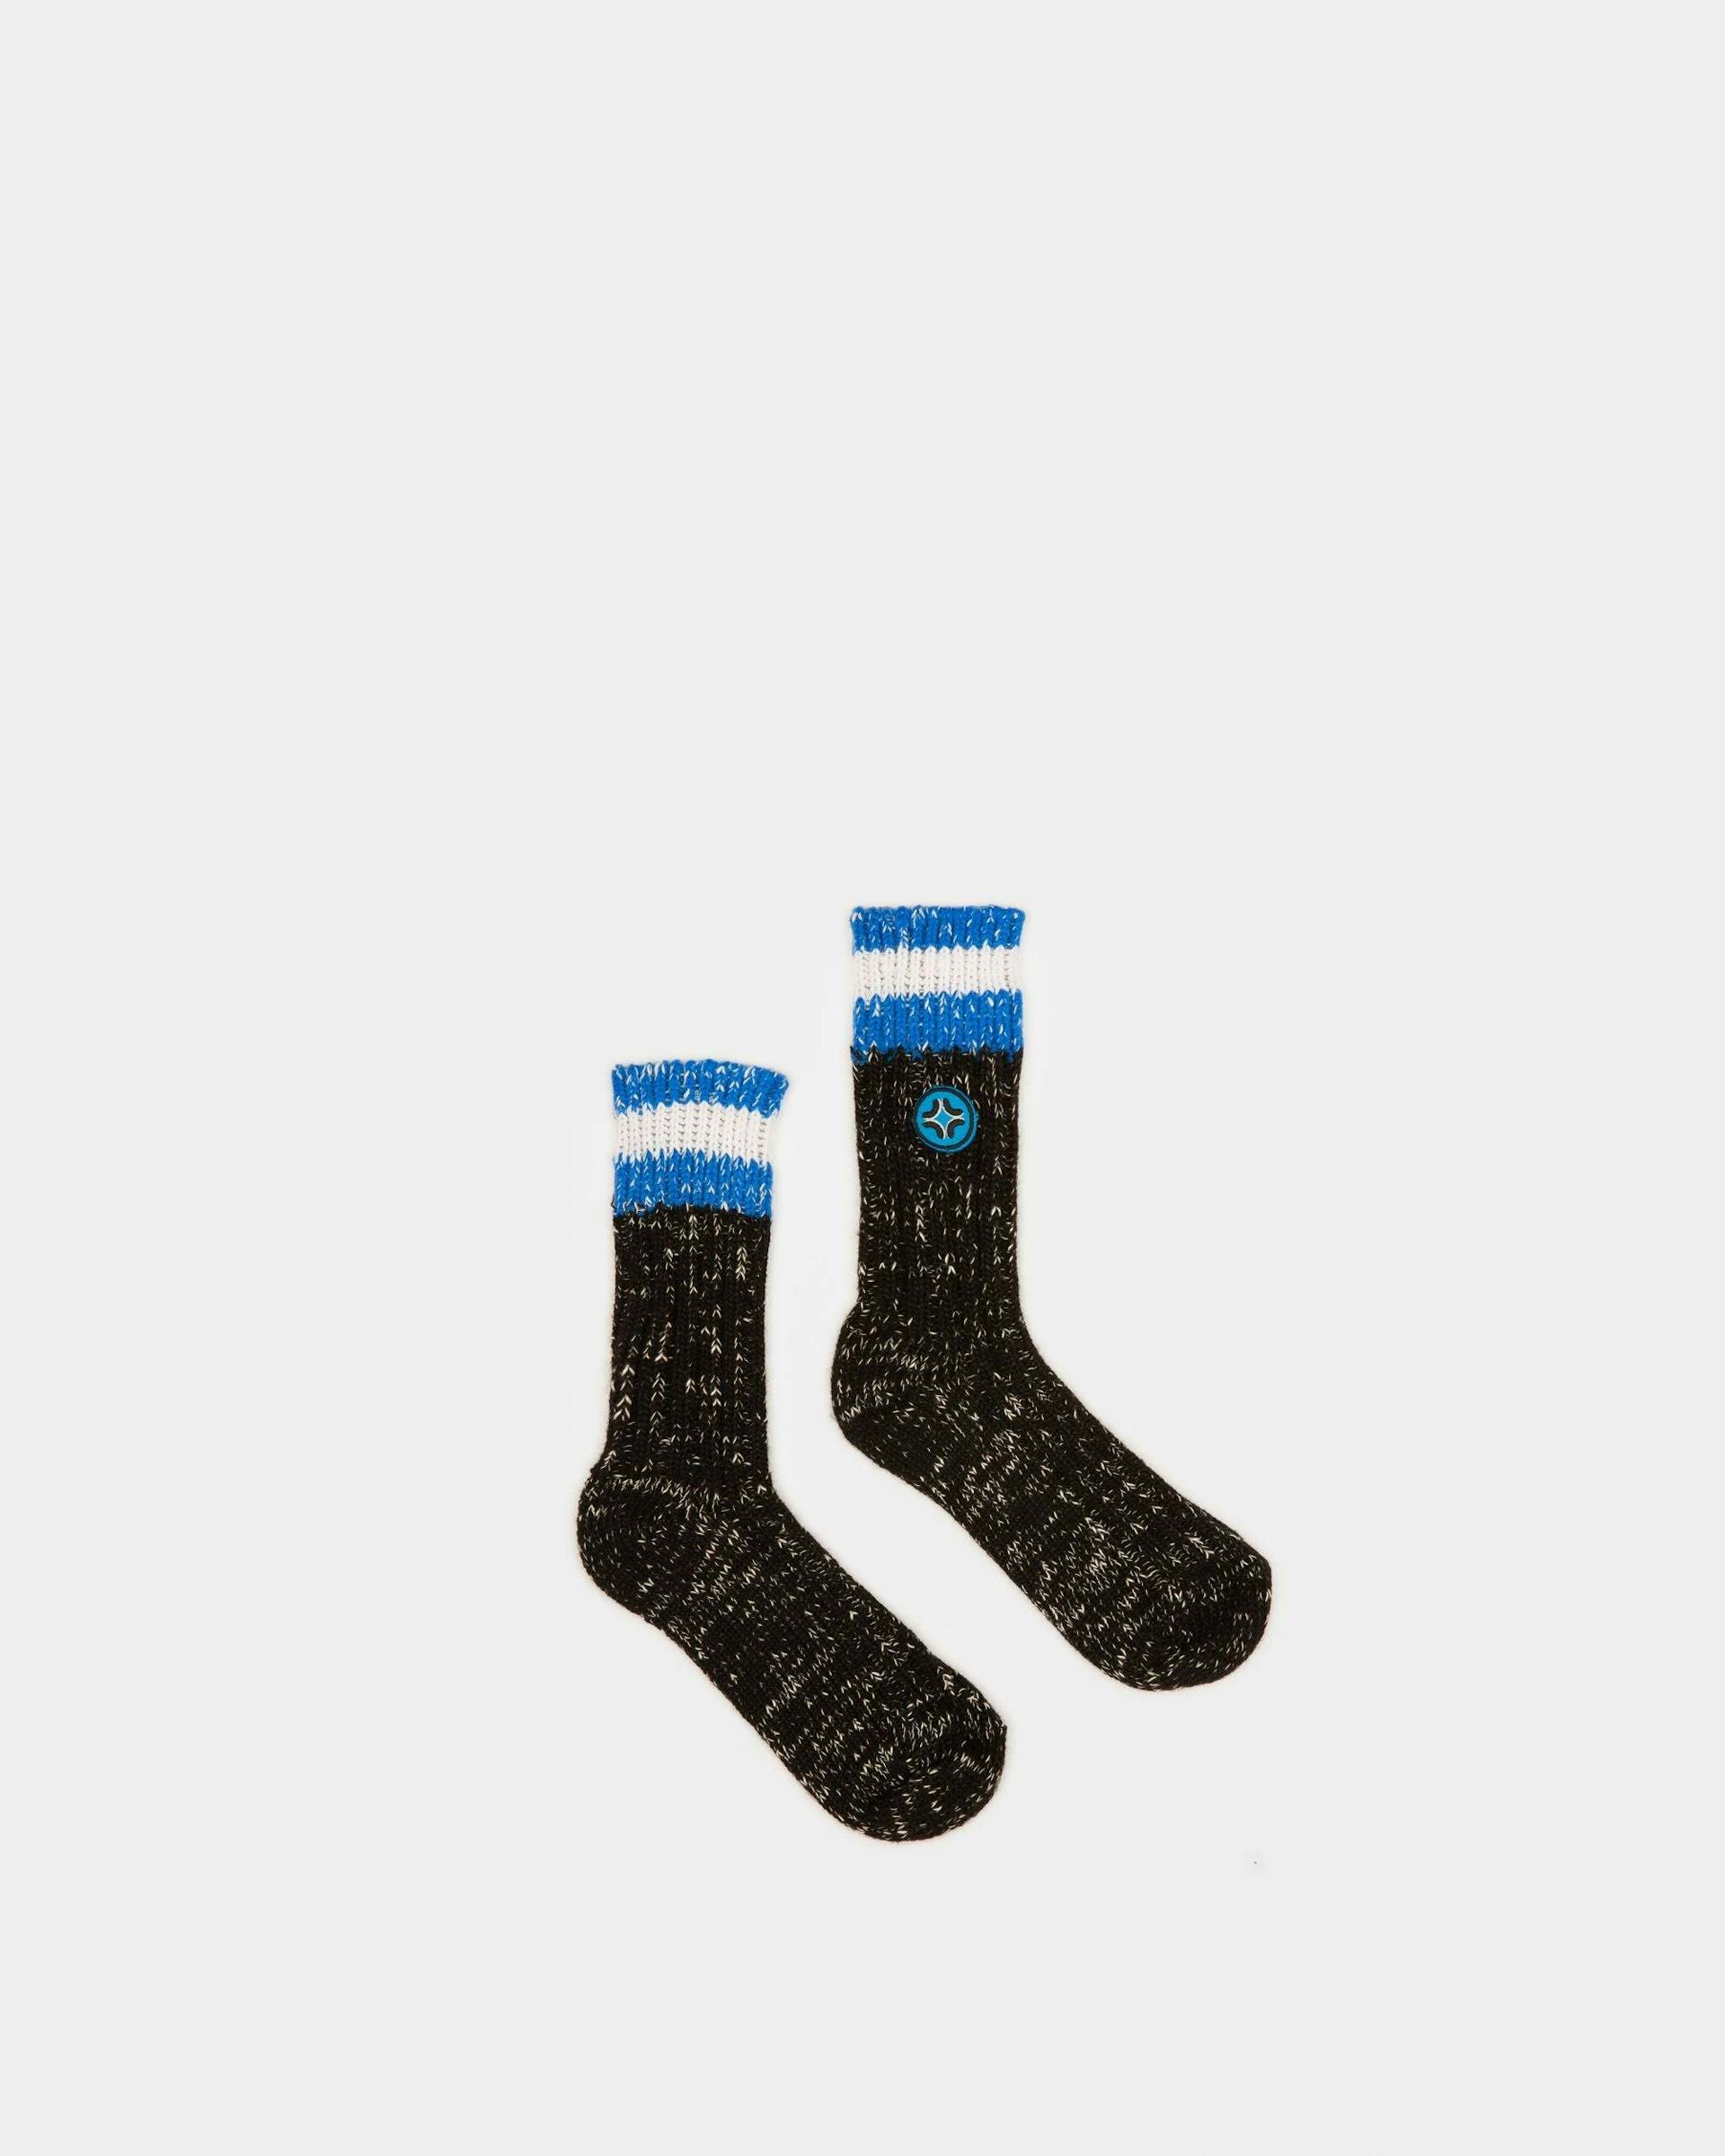 Cotton Socks In Blue & Black - Men's - Bally - 01